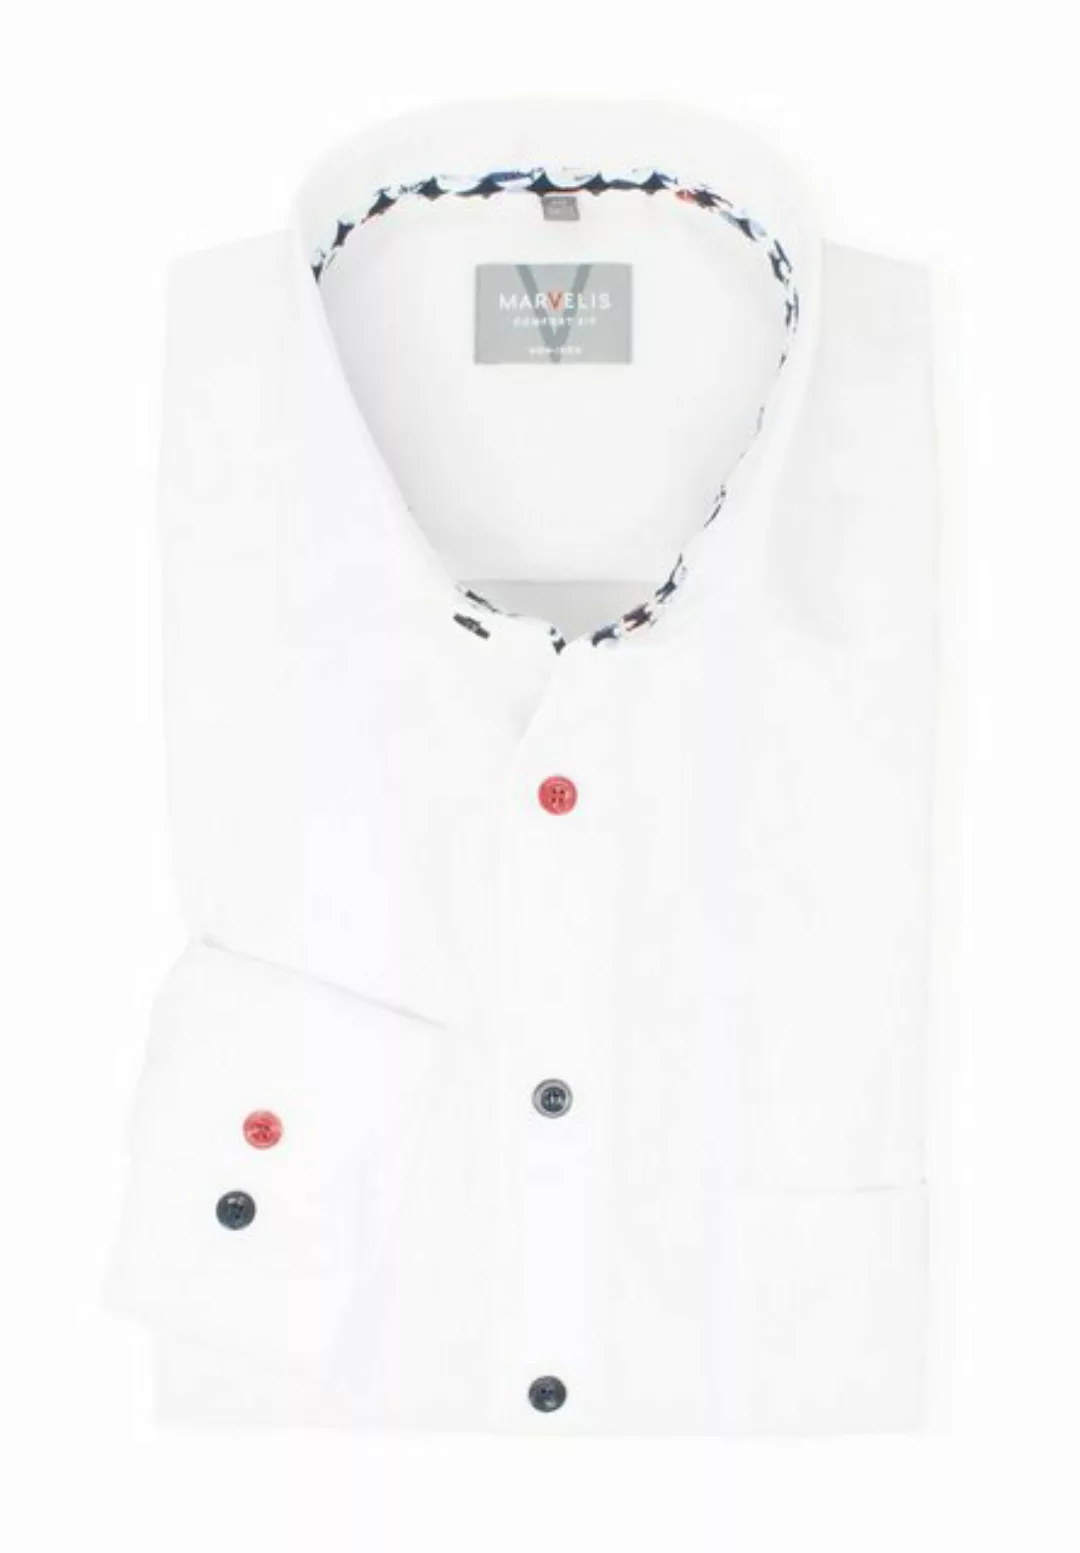 MARVELIS Businesshemd Businesshemd - Comfort Fit - Langarm - Einfarbig - We günstig online kaufen